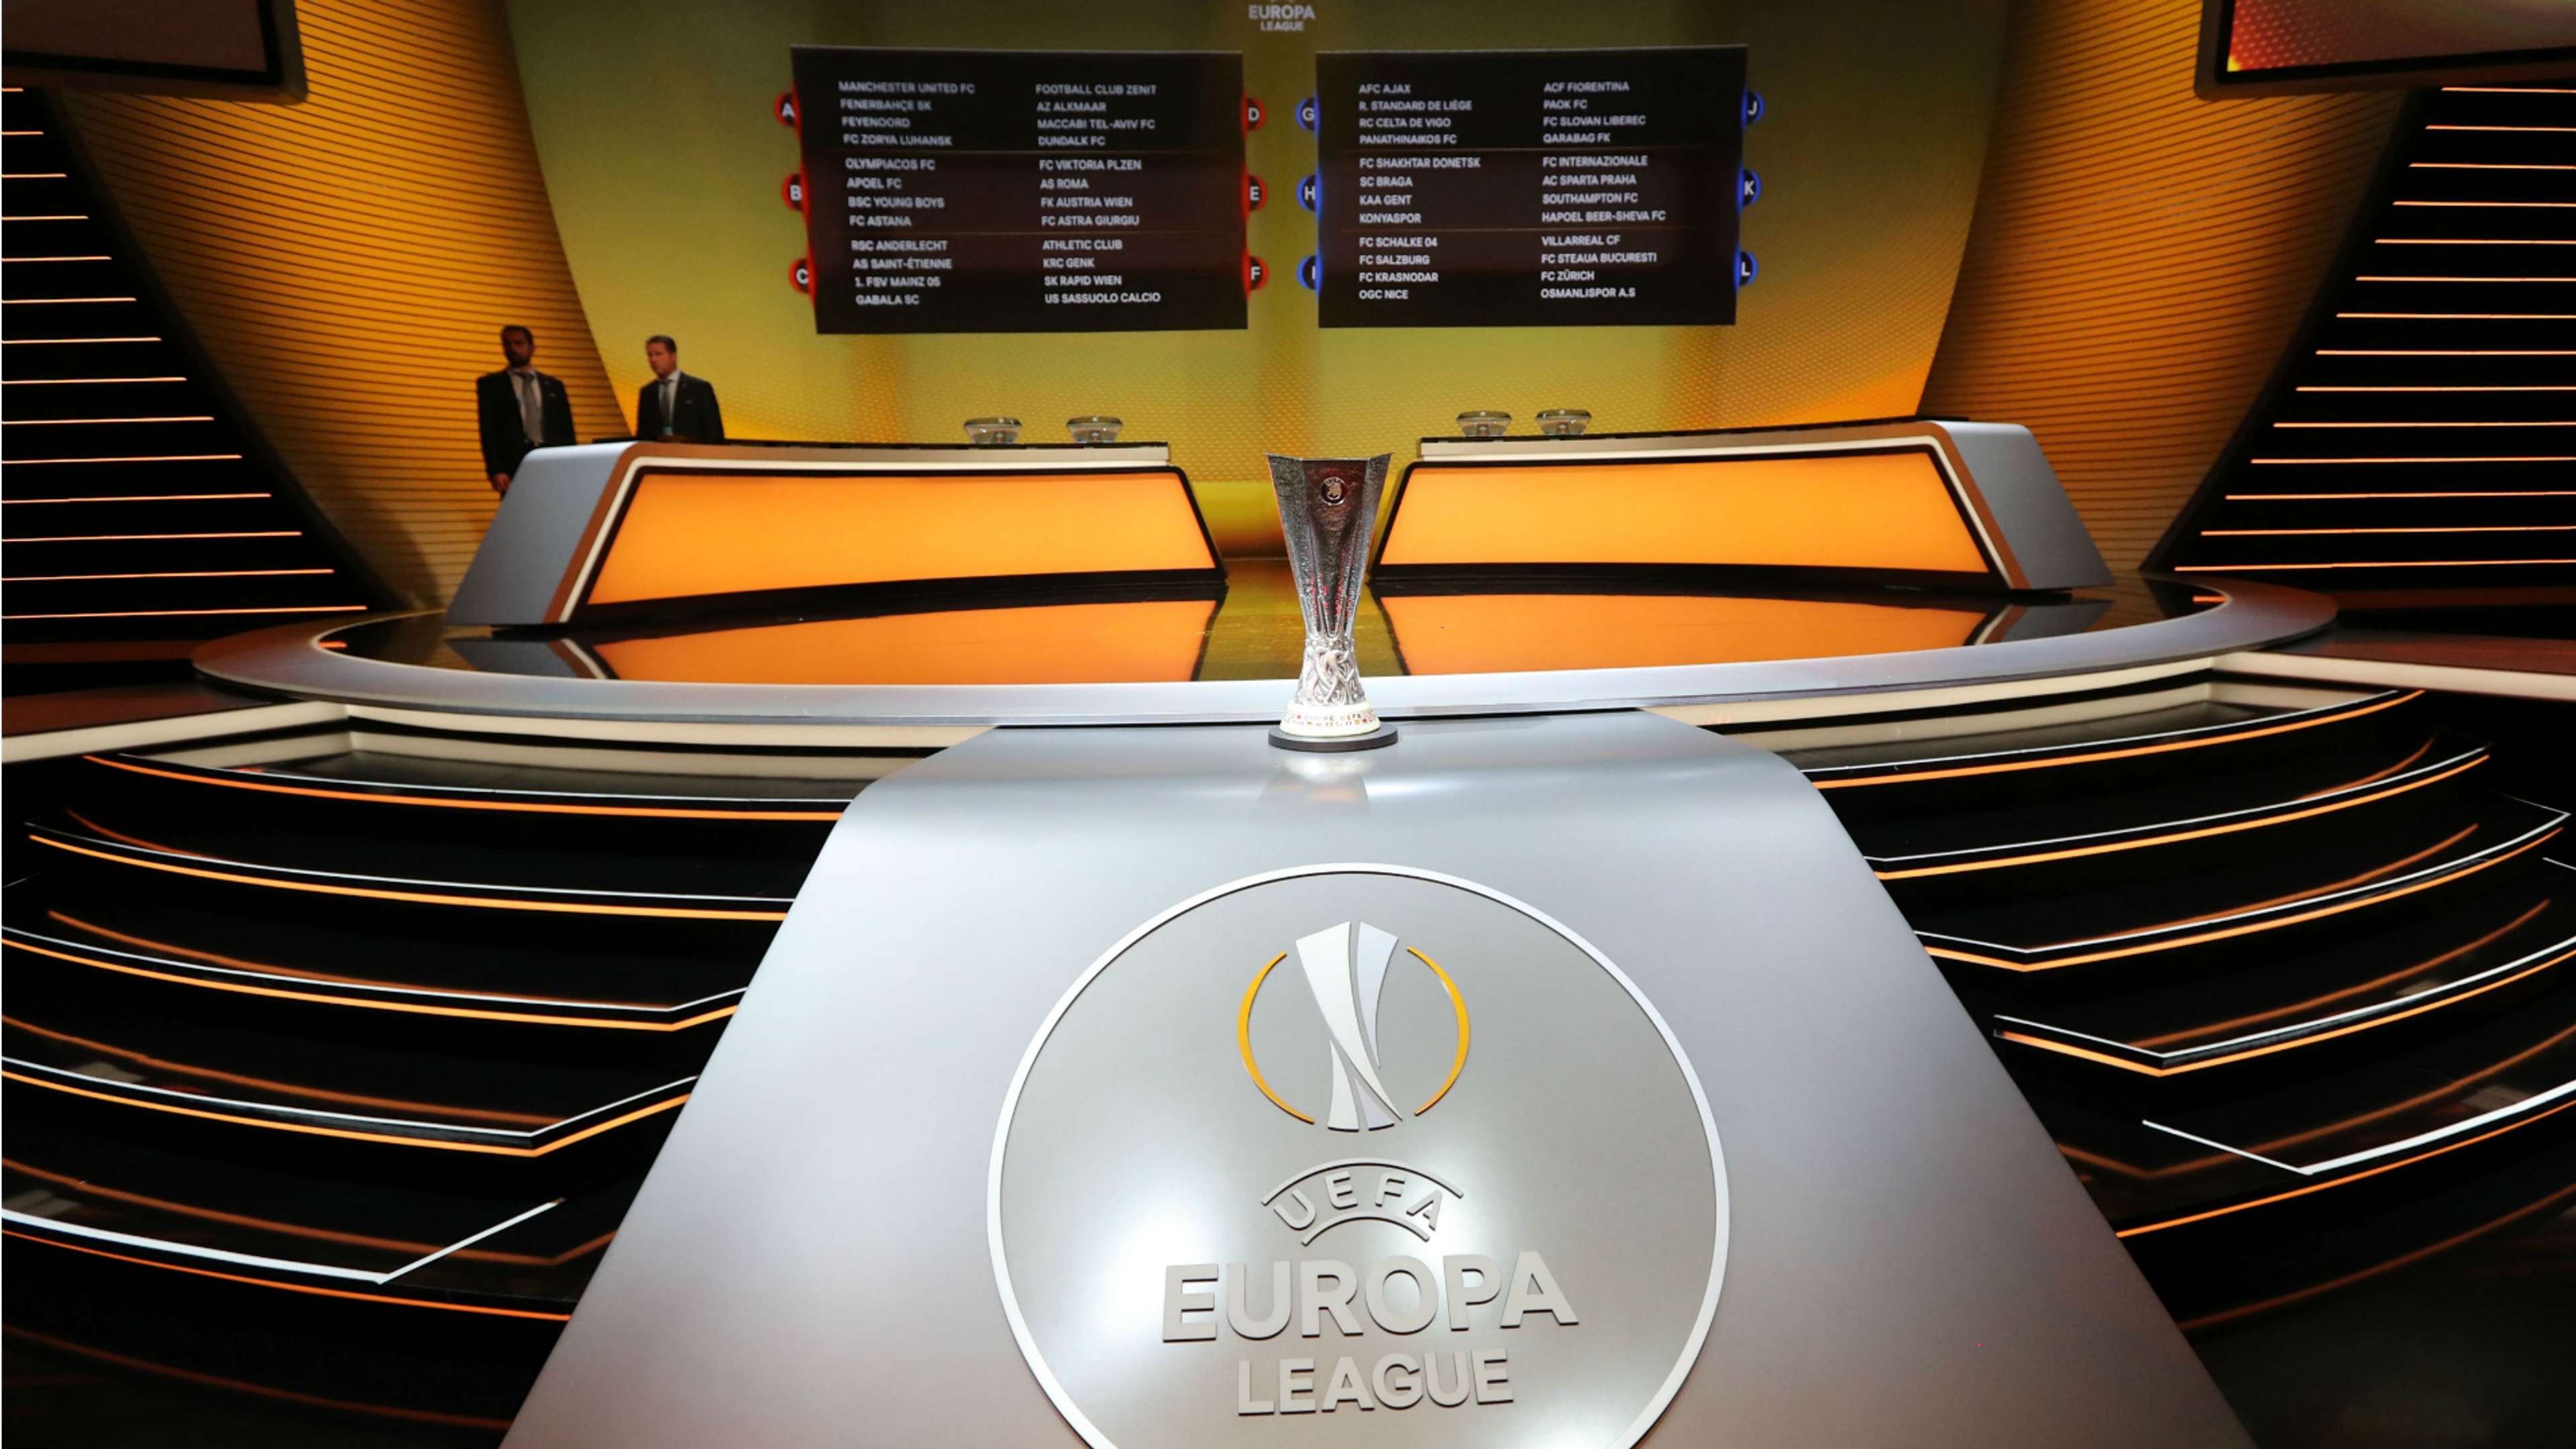 Europa League 2016 draw